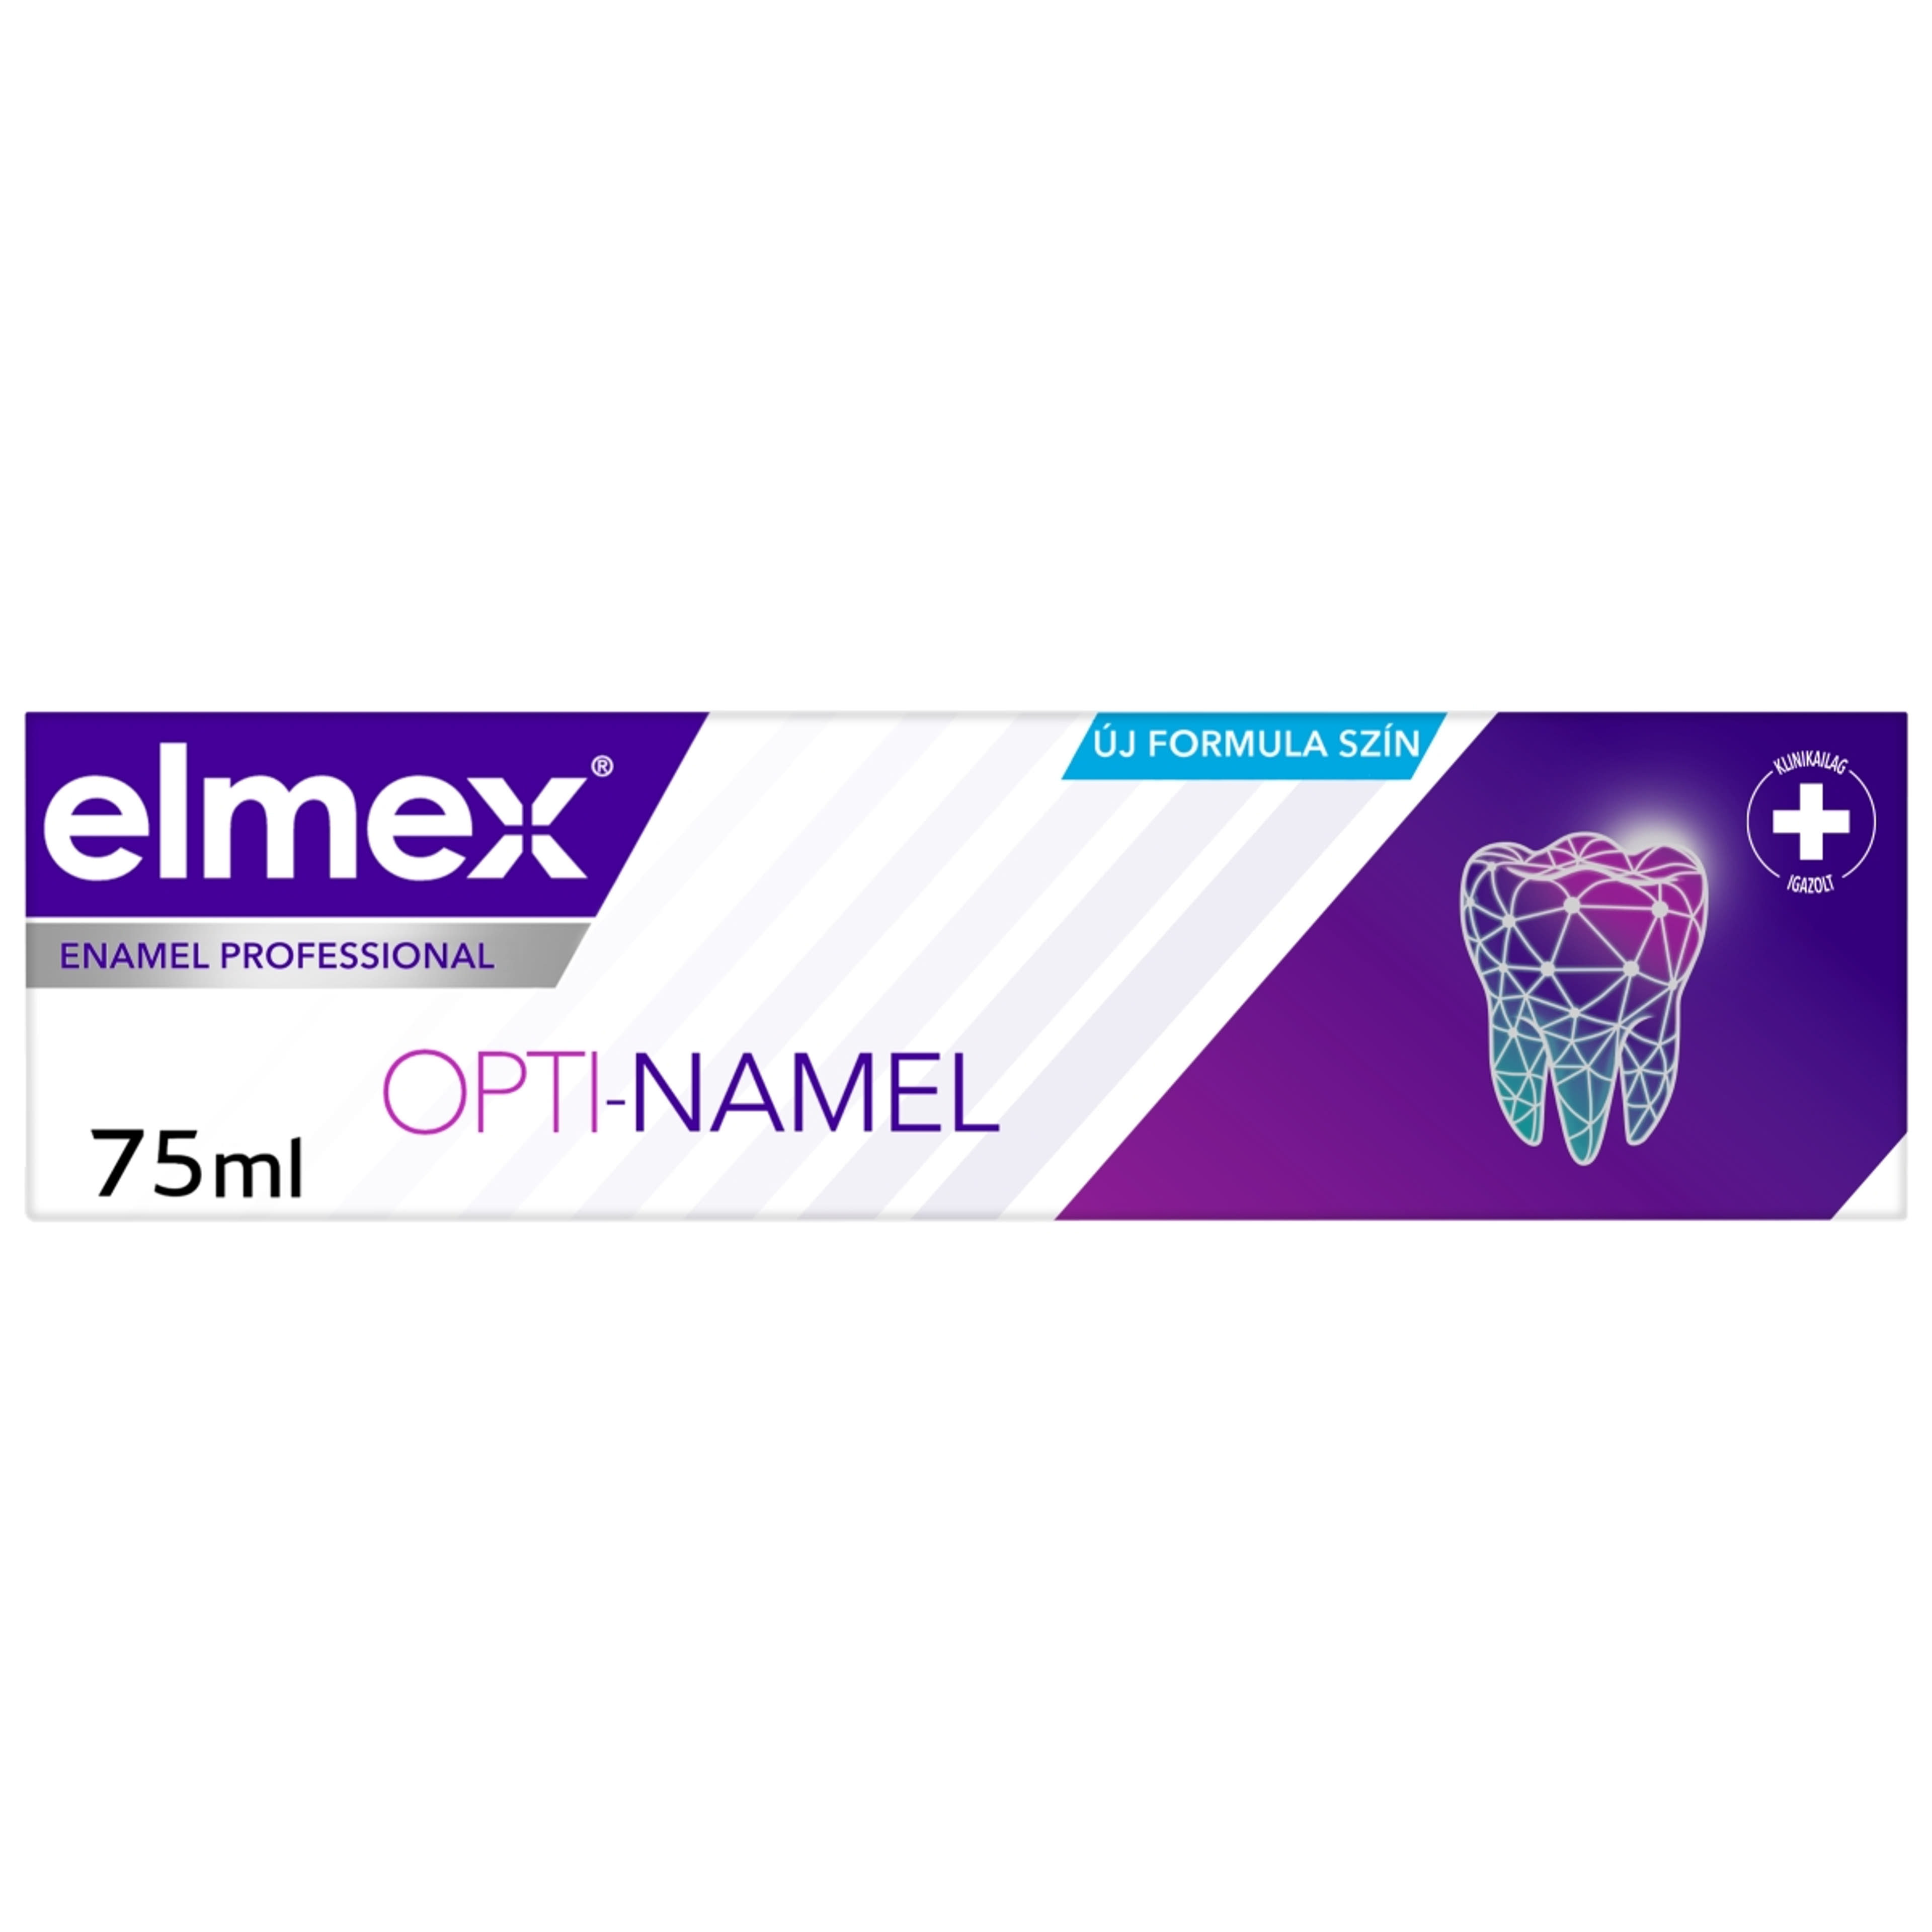 Elmex® Opti-namel Professional Seal & Strengthen fogkrém - 75 ml-9